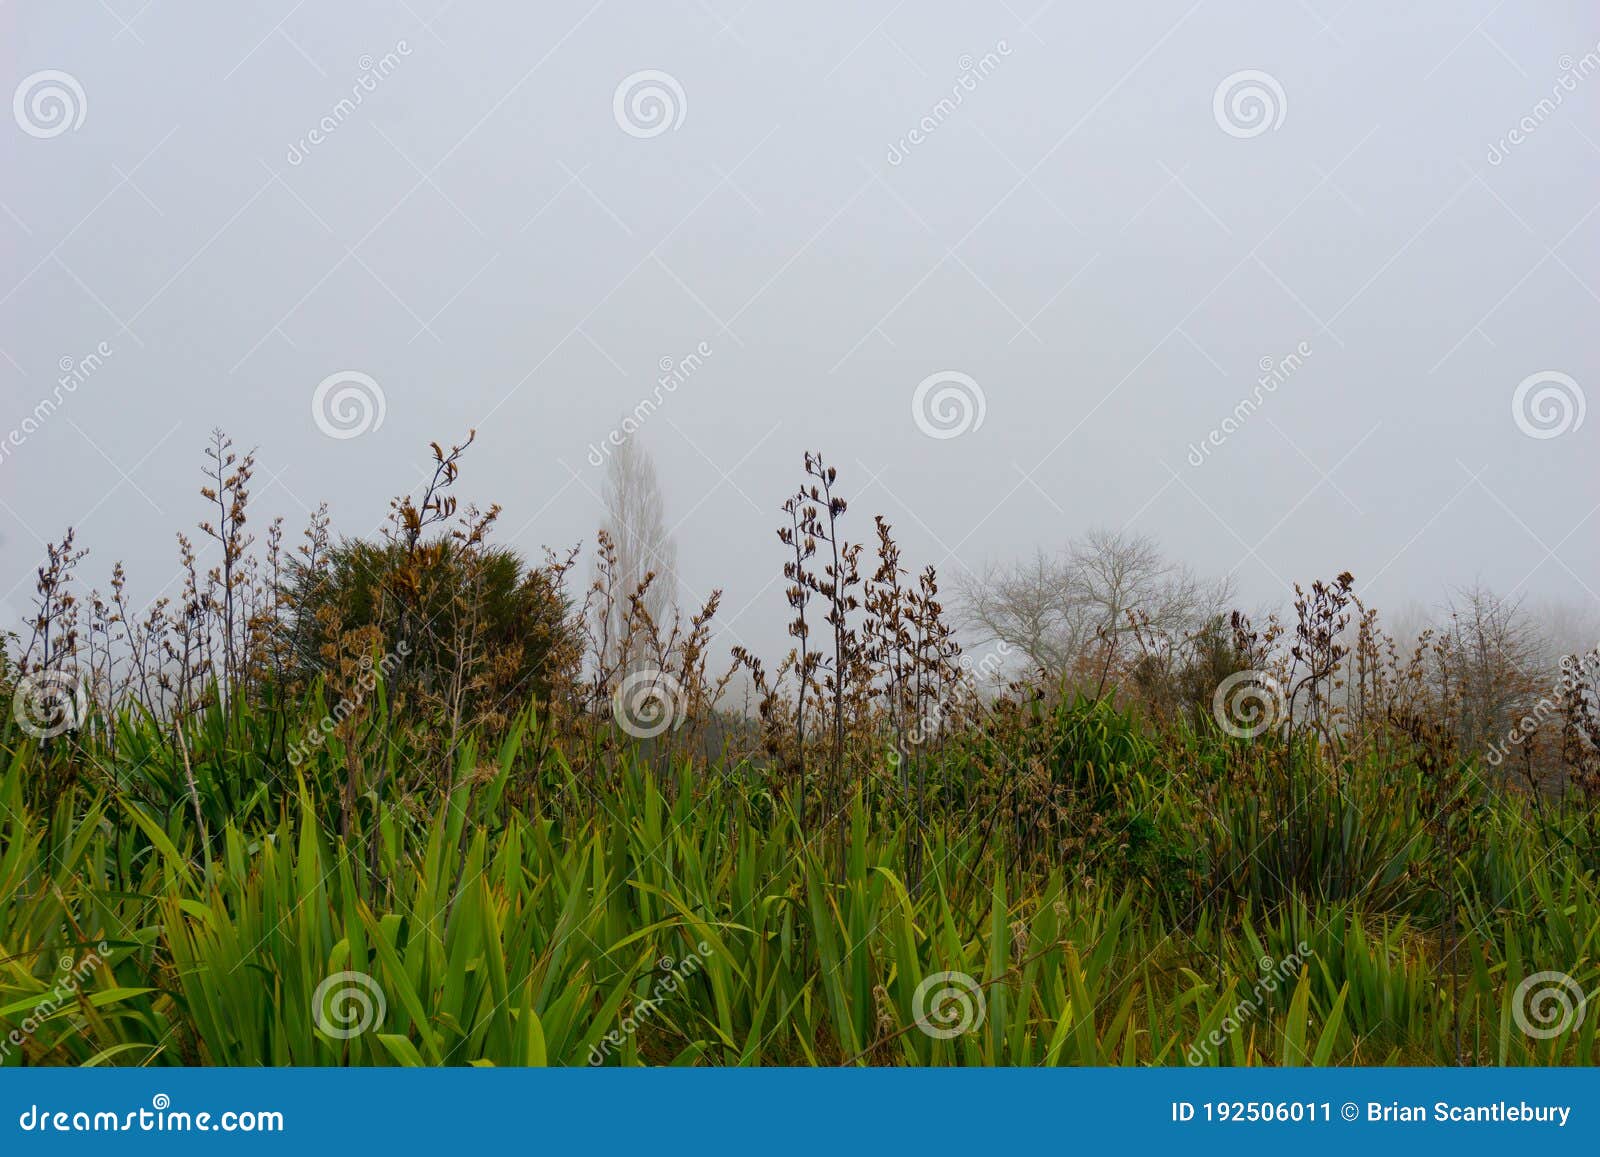 swampland on edge of lake okareka with leafless trees though mist